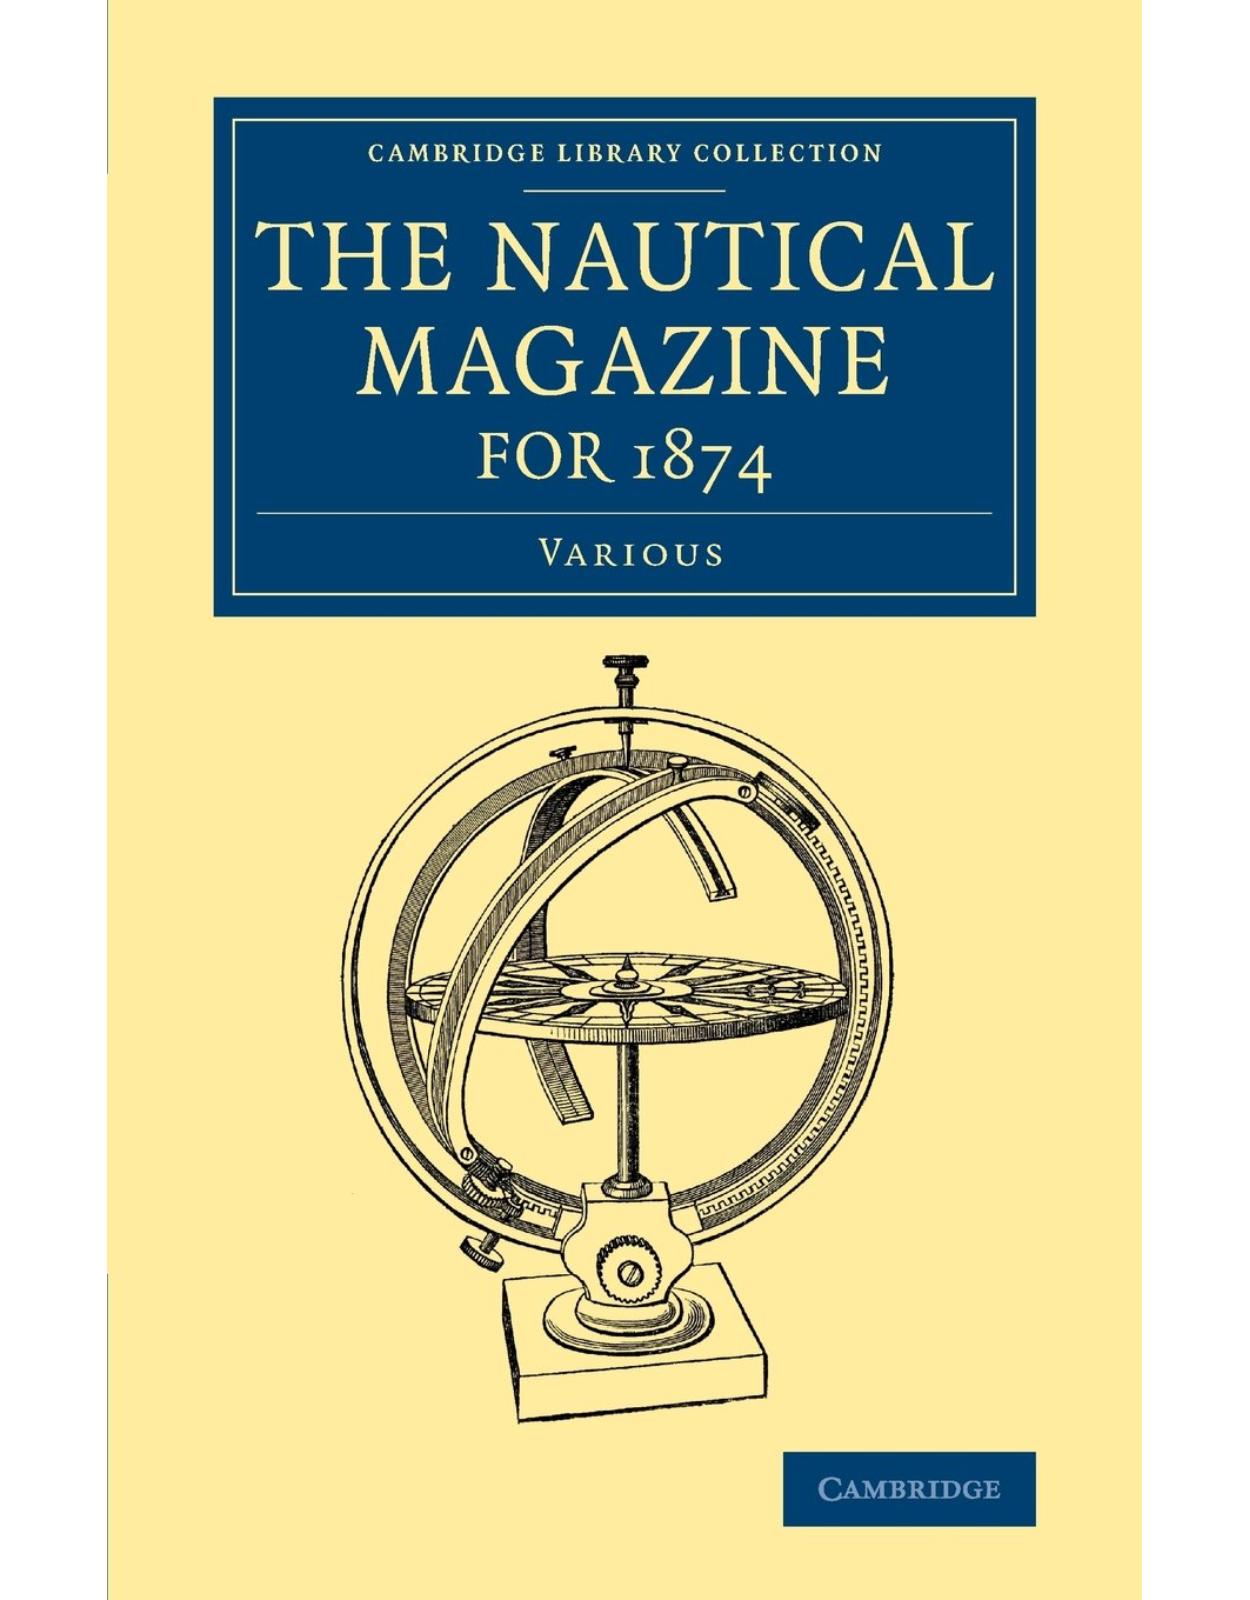 The Nautical Magazine for 1874 (Cambridge Library Collection - The Nautical Magazine)